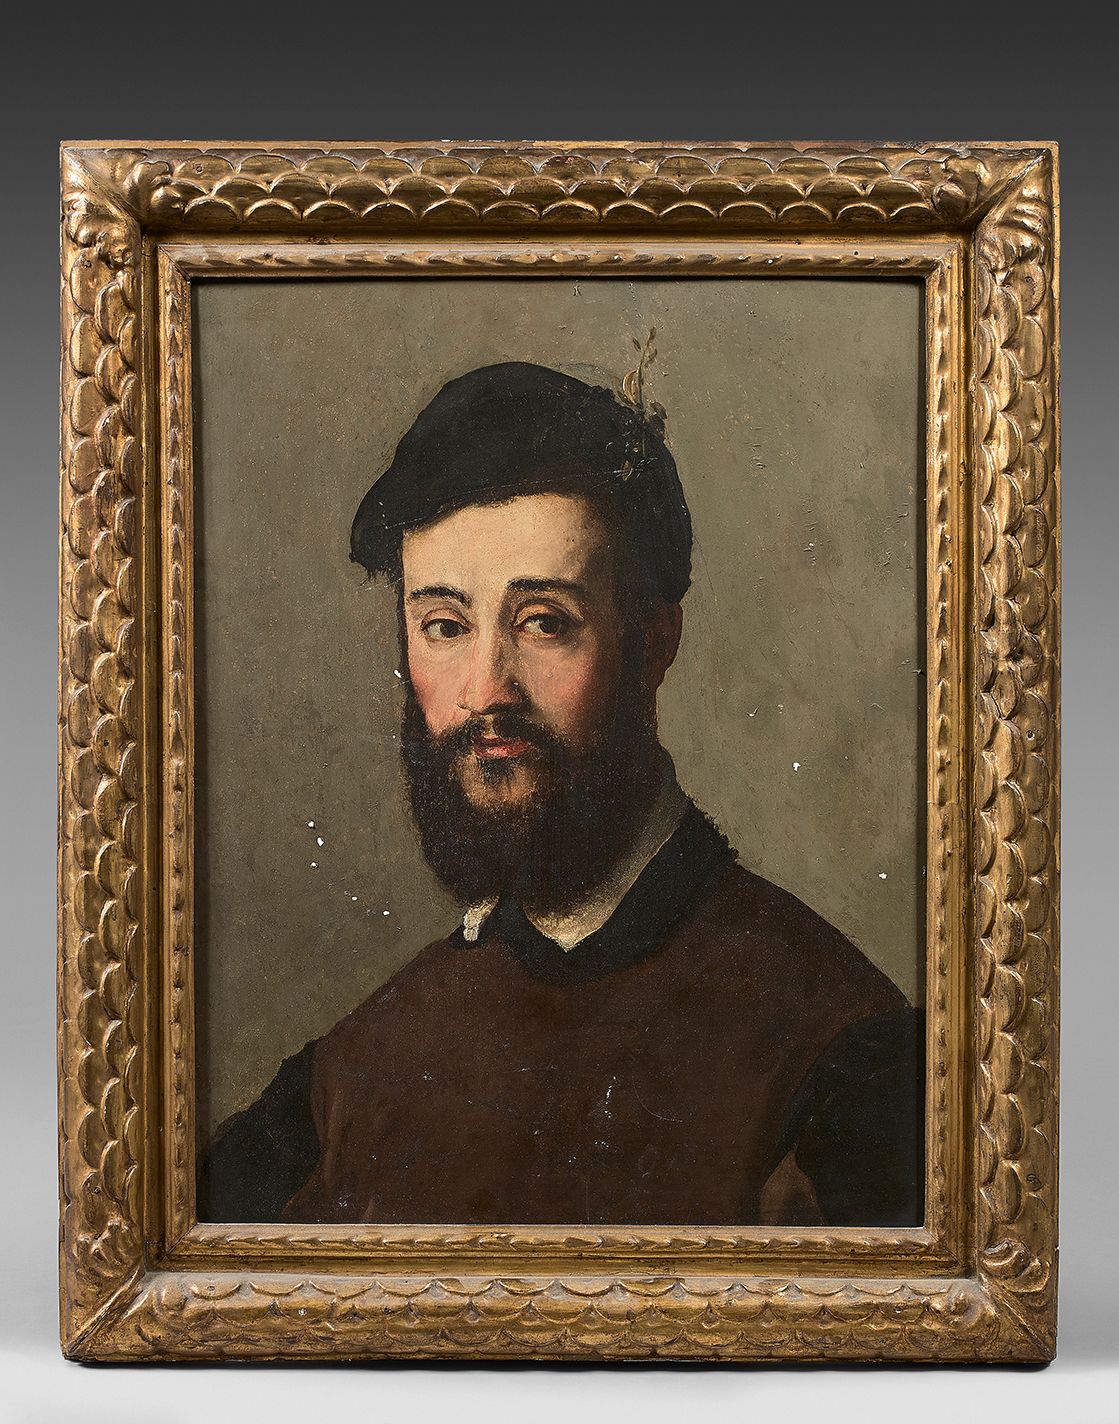 Ecole Italienne du XIXe siècle Porträt eines Mannes mit Bart
Verstärkte Pappelho&hellip;